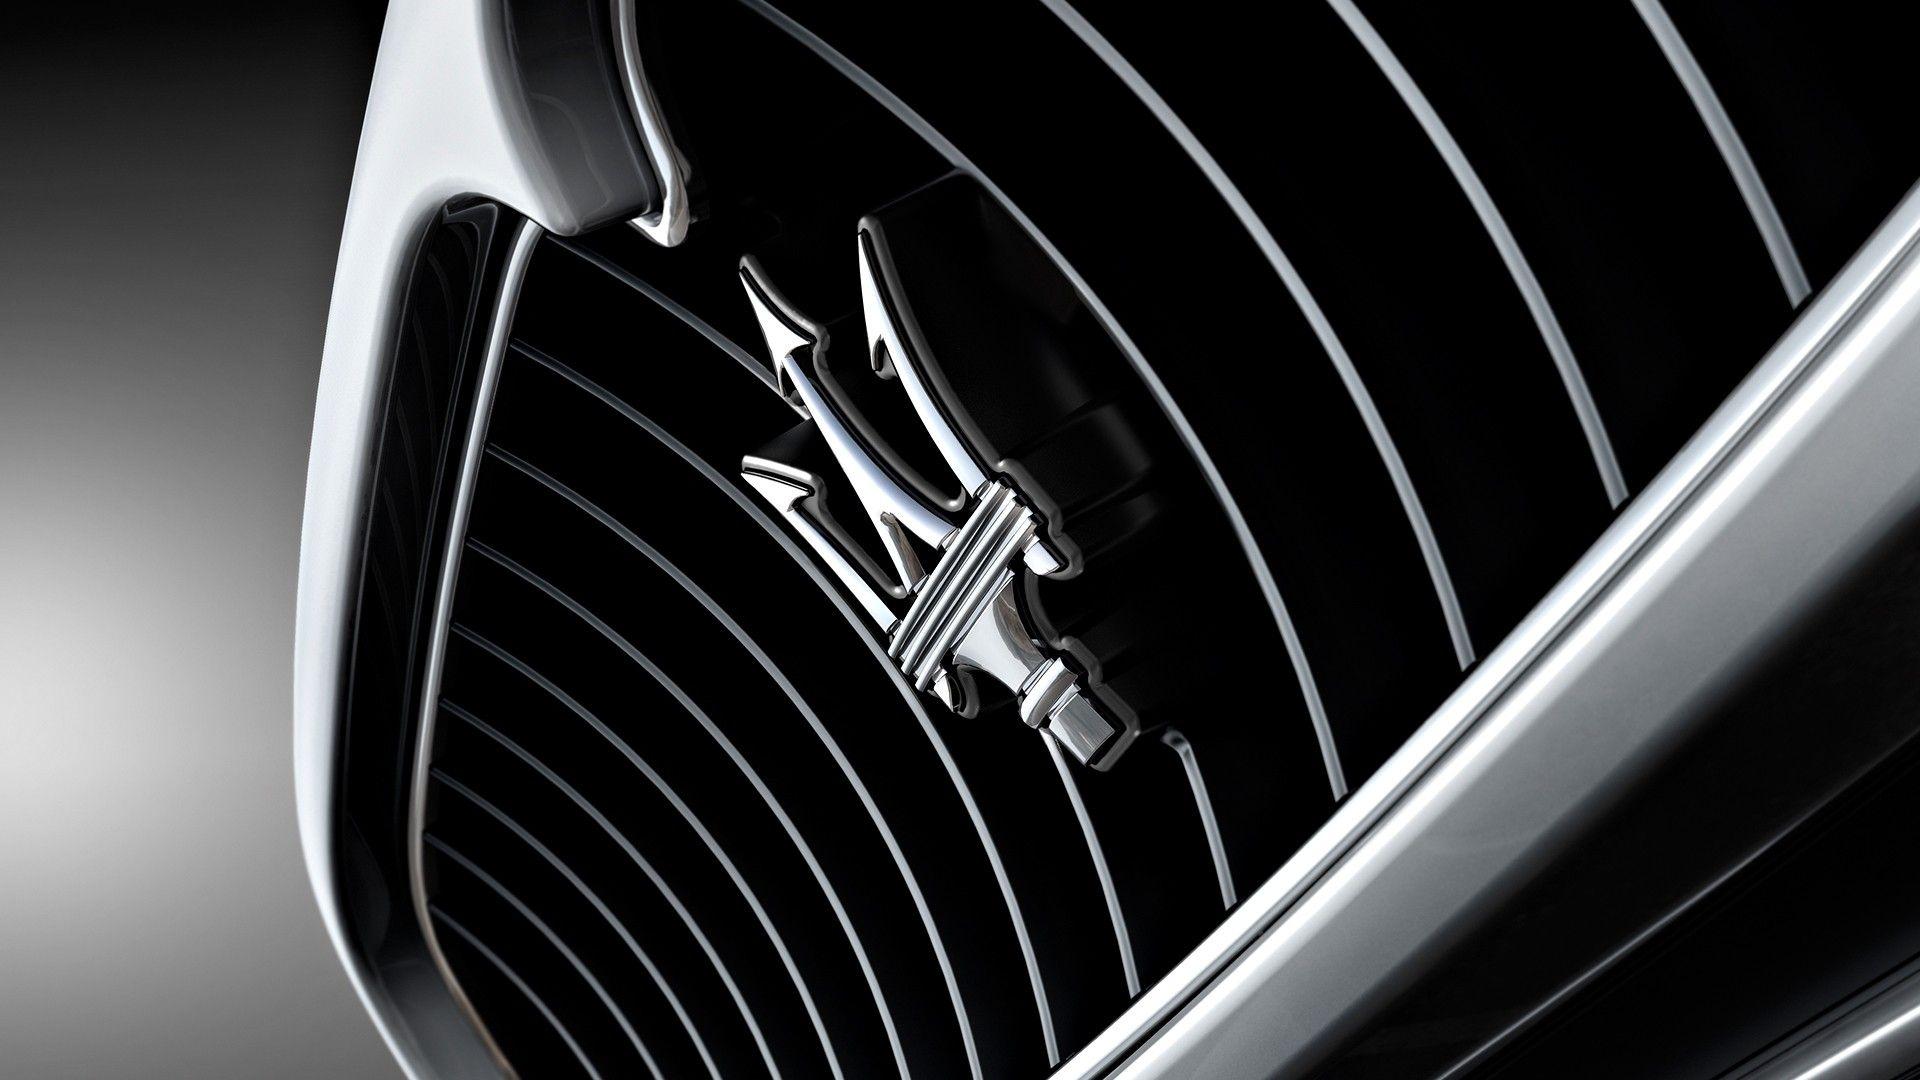 Black and White Sport Car Logo - Maserati Logo, Maserati Car Symbol Meaning and History | Car Brand ...